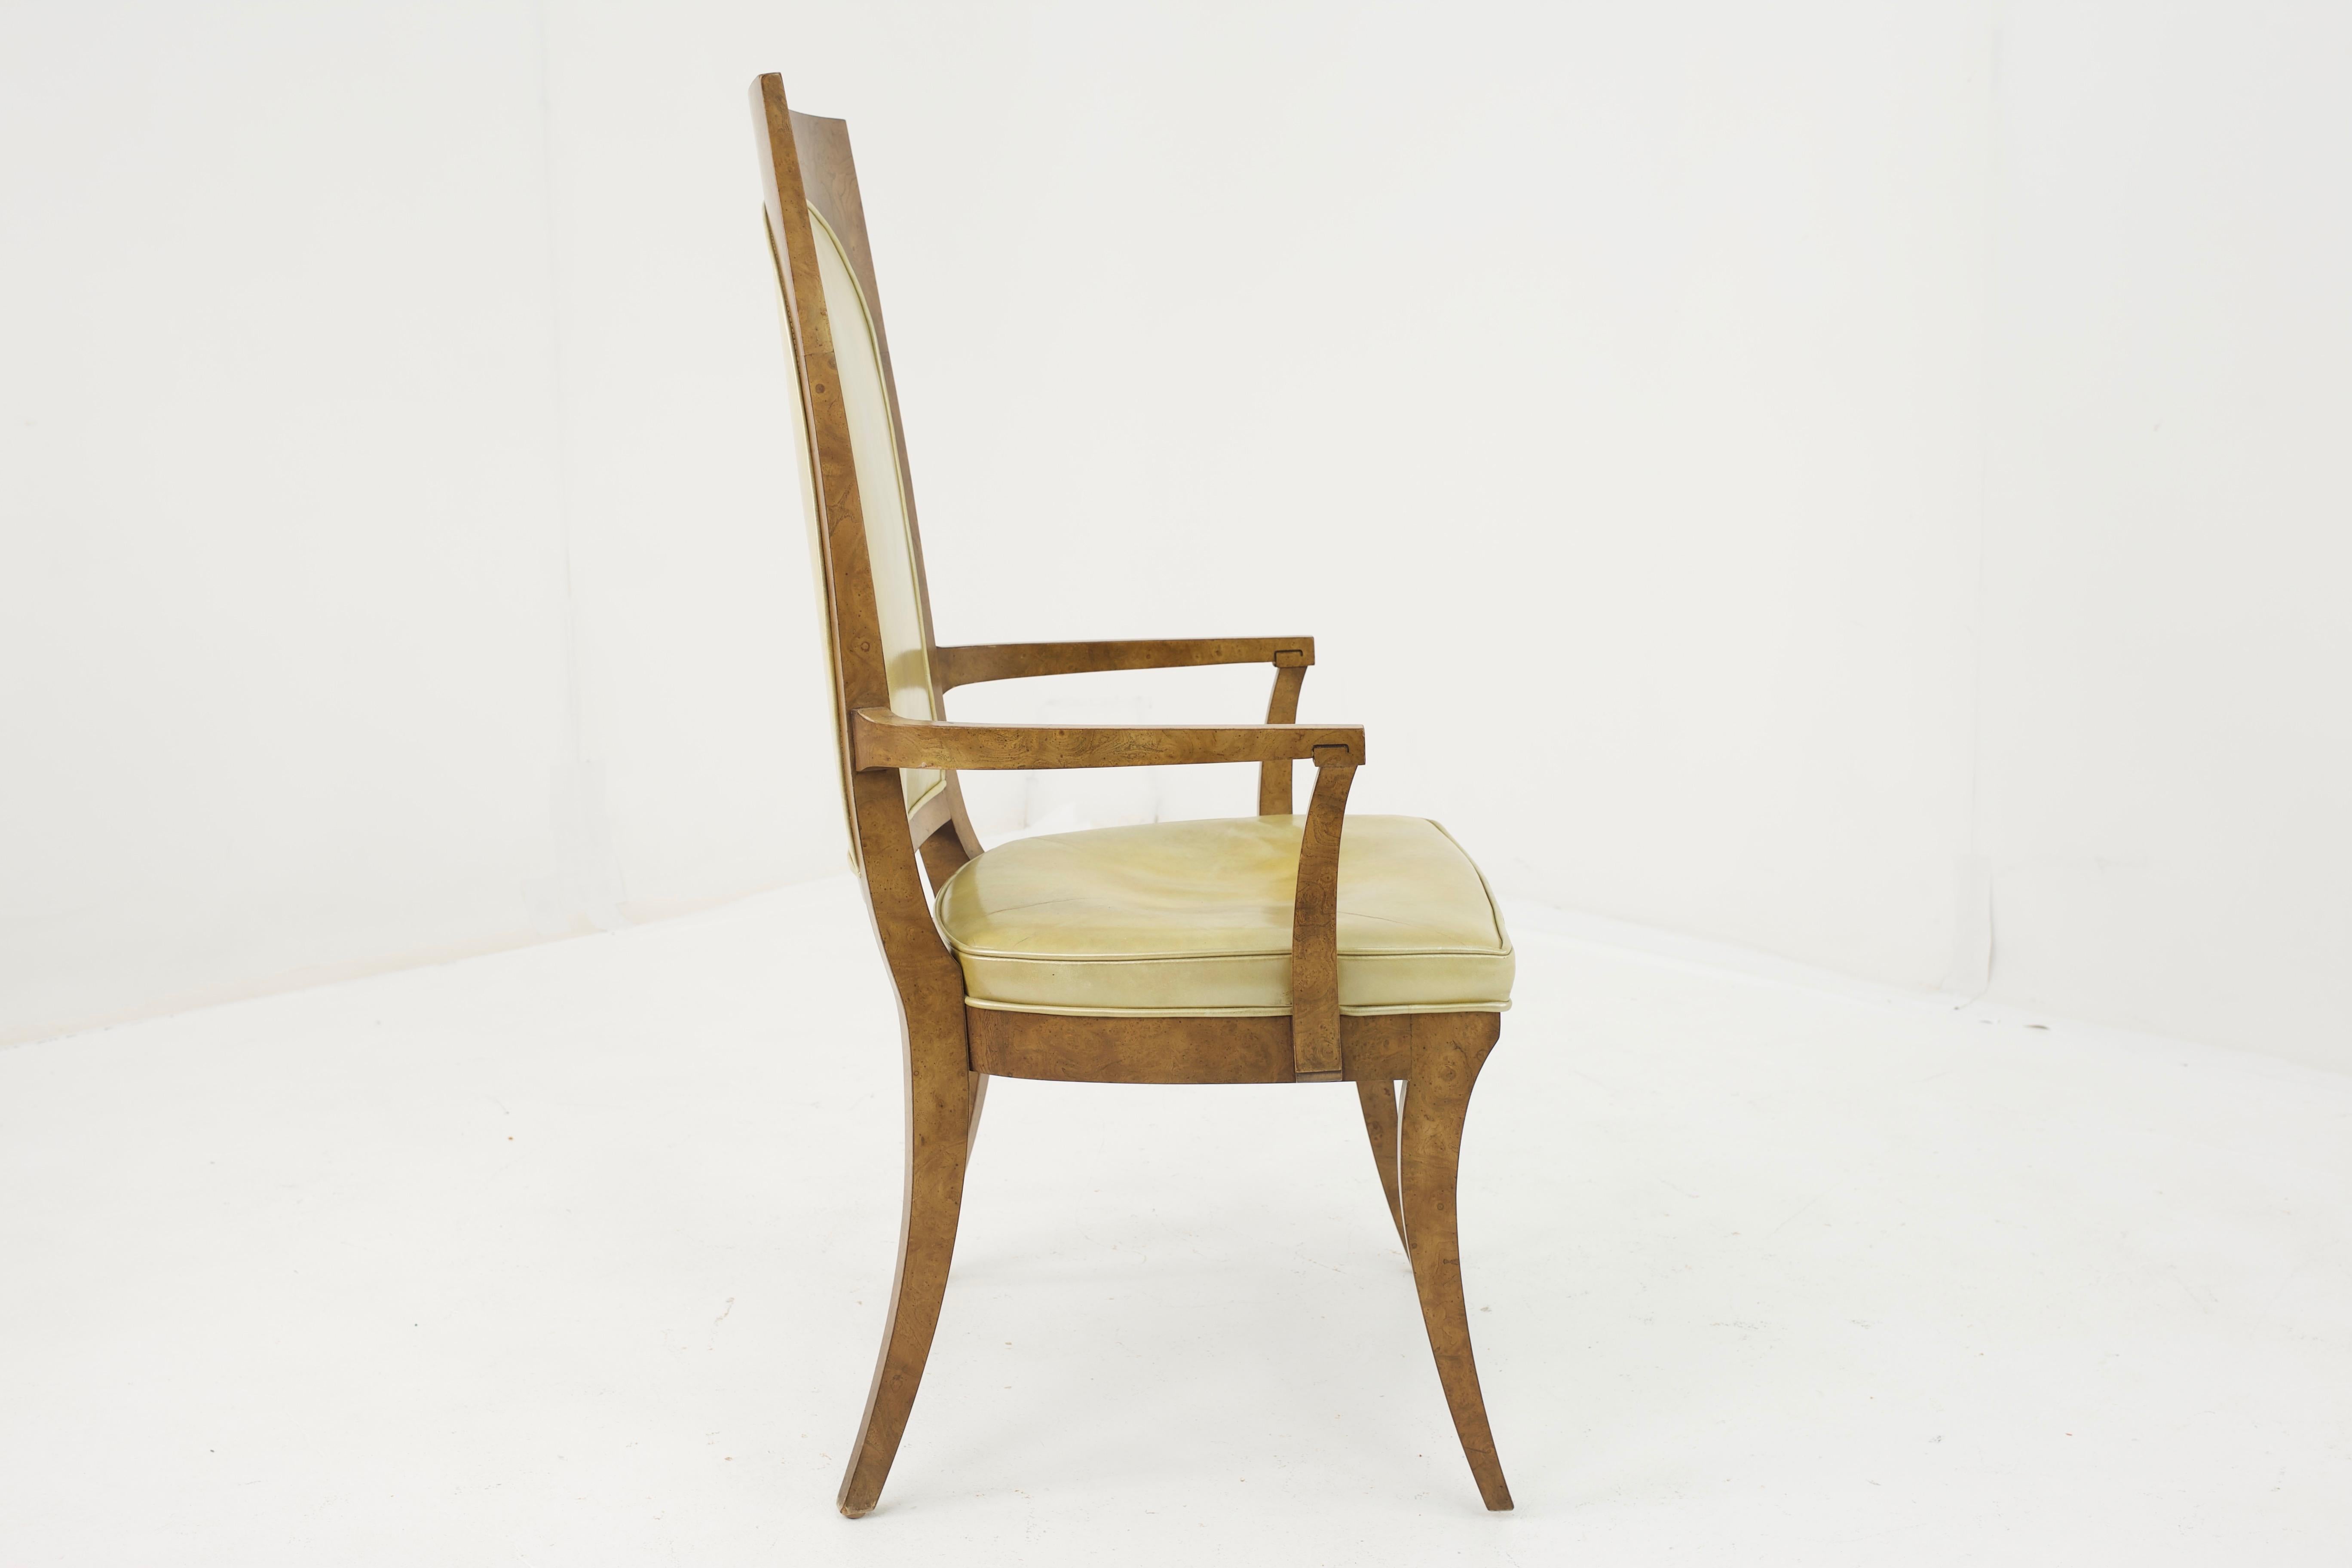 Wood Mastercraft Mid Century Burlwood Dining Chairs - Set of 6 For Sale